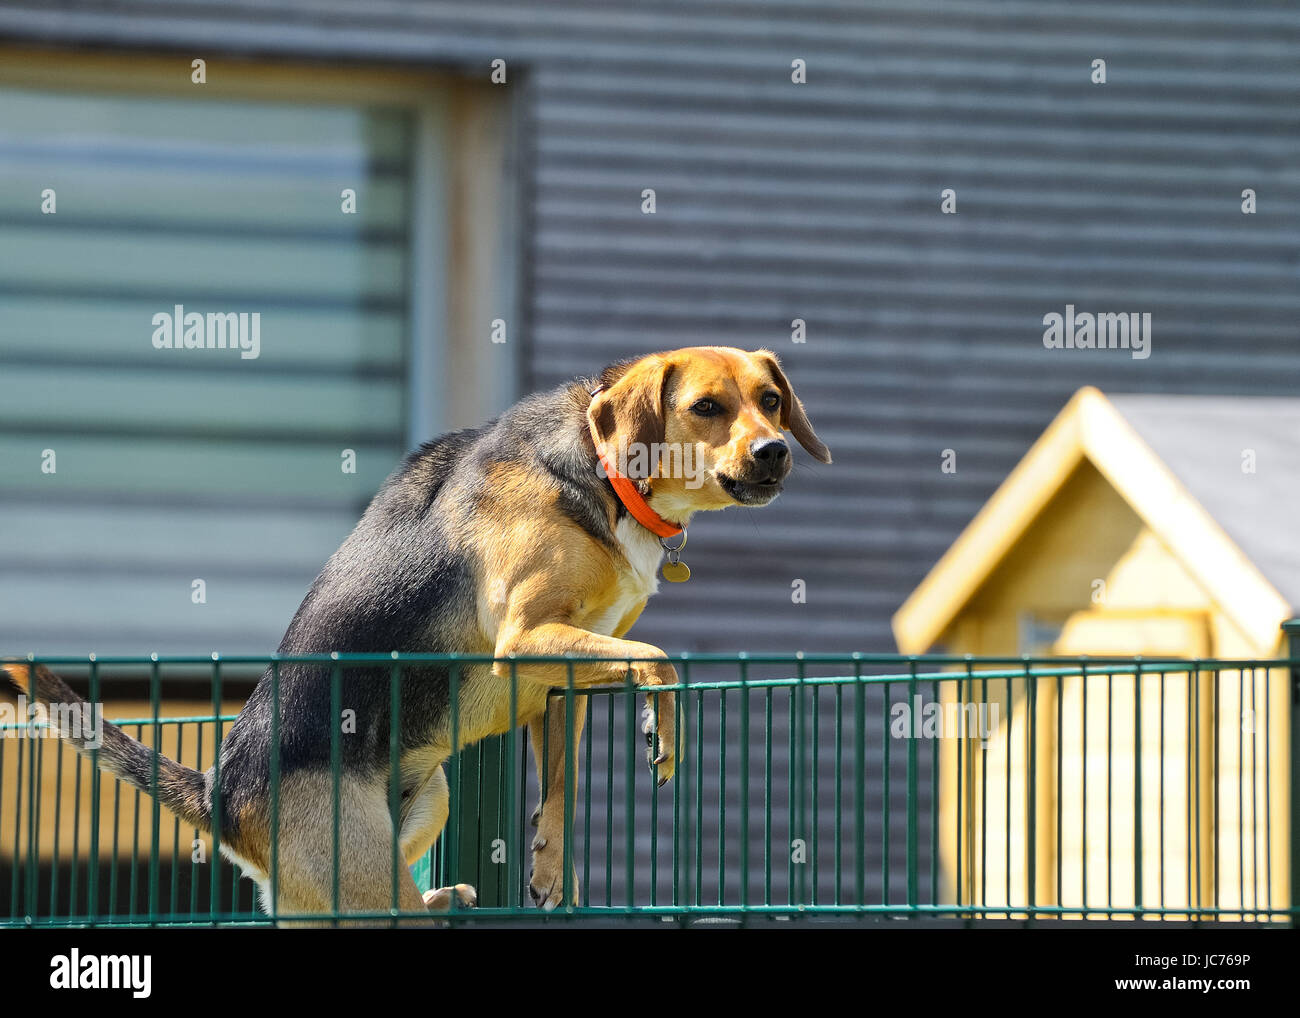 dog climbs over the fence Stock Photo